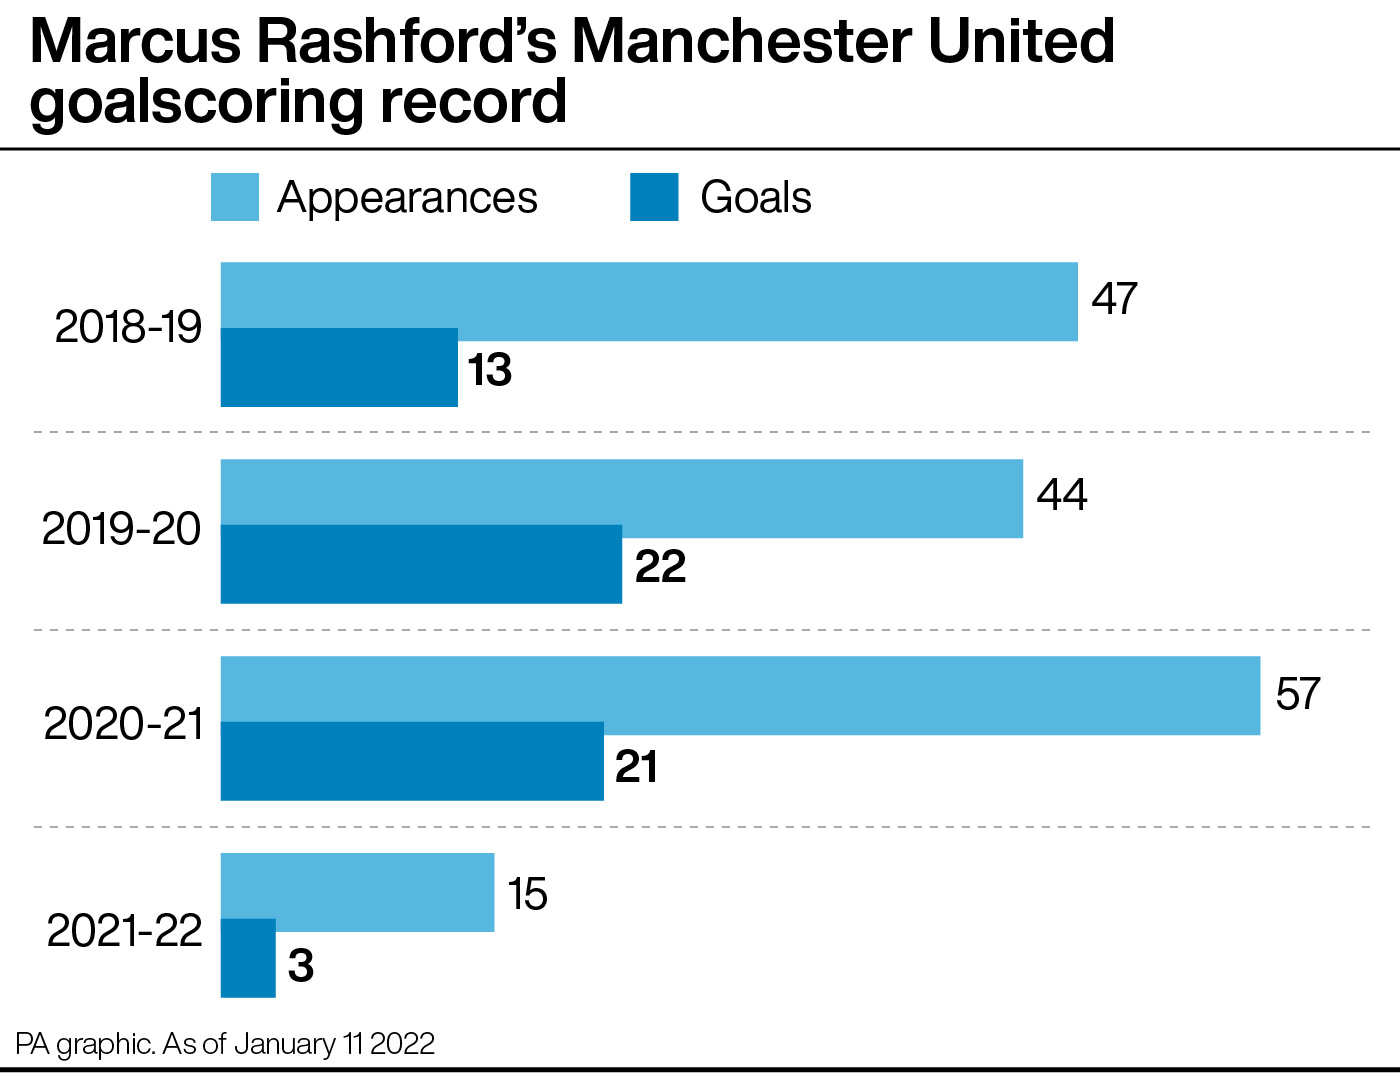 Marcus Rashford's Manchester United goalscoring record